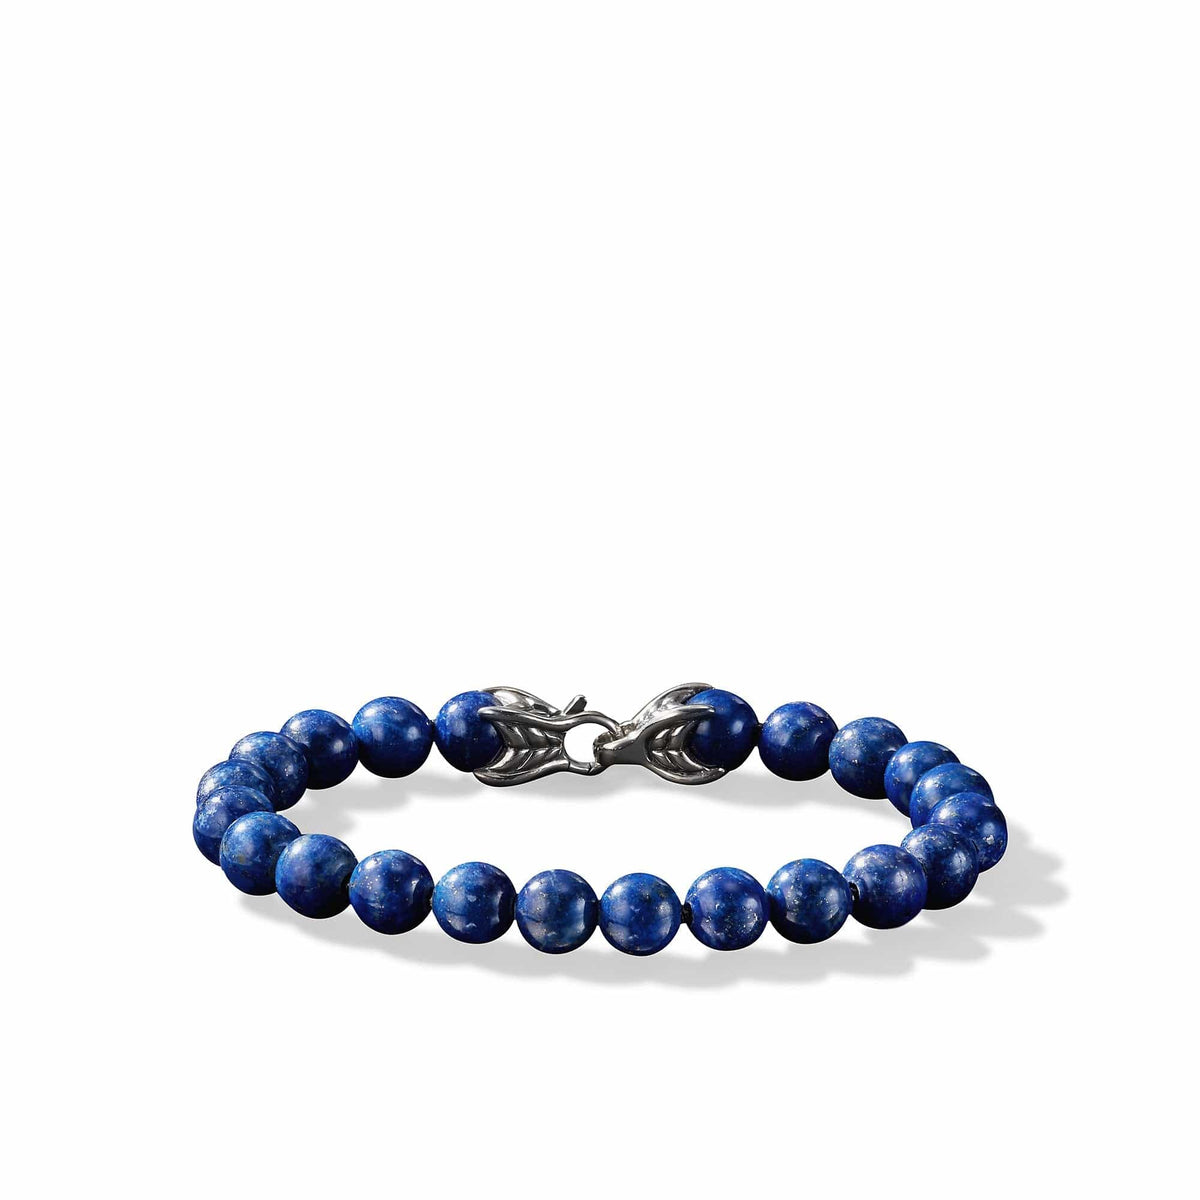 Spiritual Beads Bracelet with Lapis Lazuli, Long's Jewelers